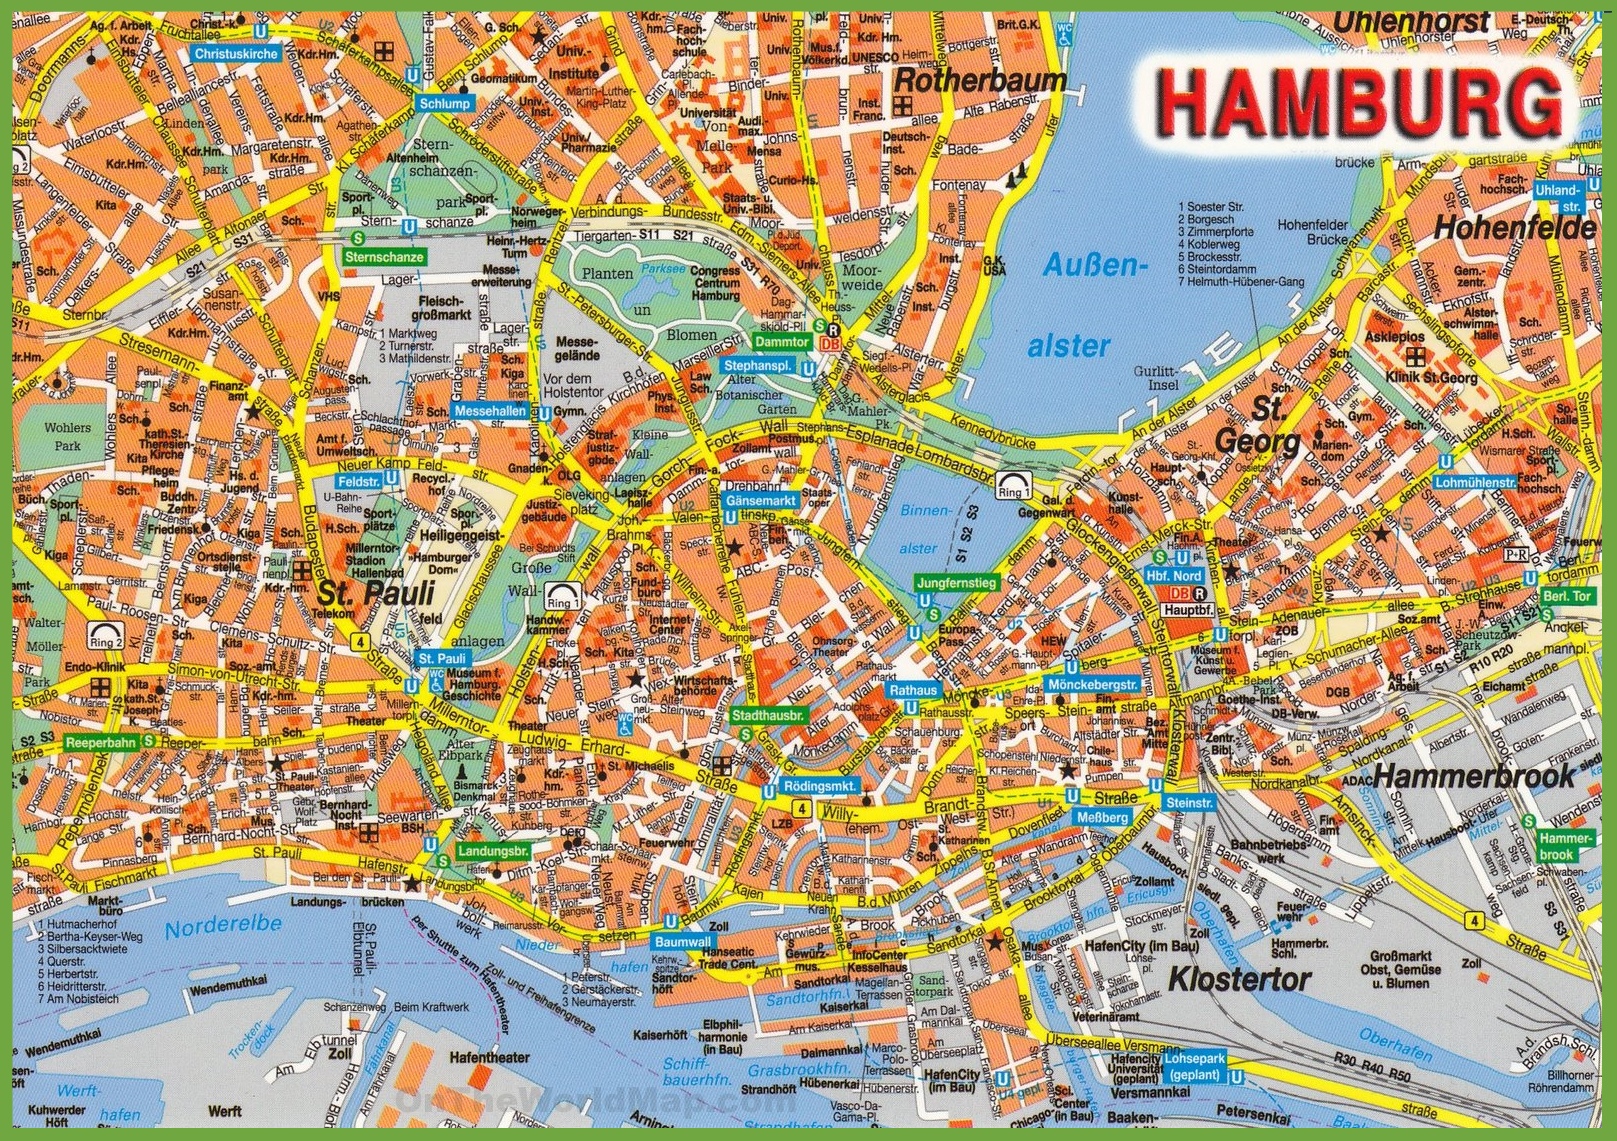 hamburg city tour bus map